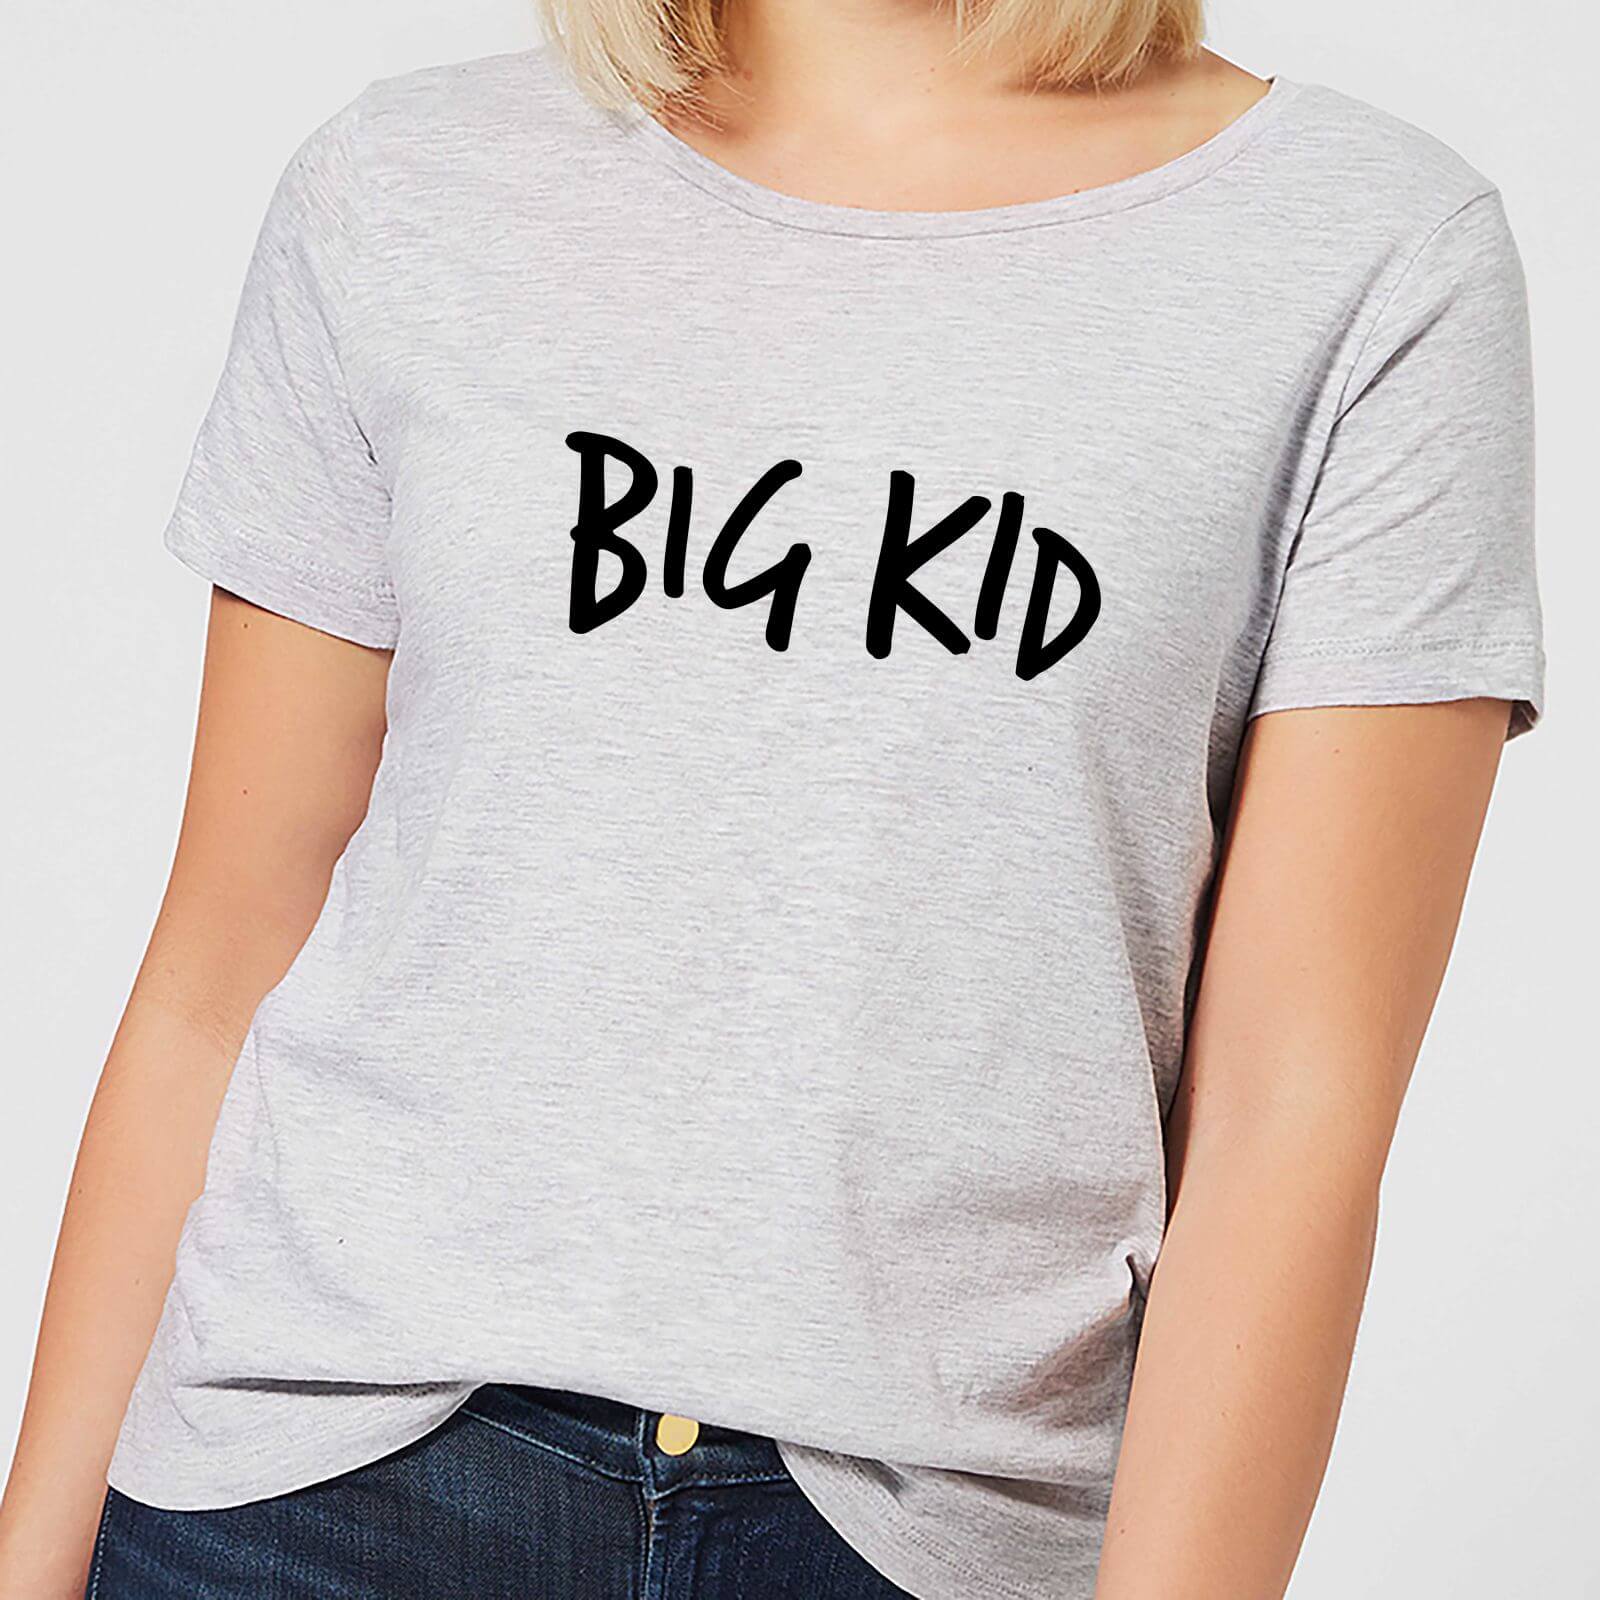 Big Kid Women's T-Shirt - Grey - L - Grey